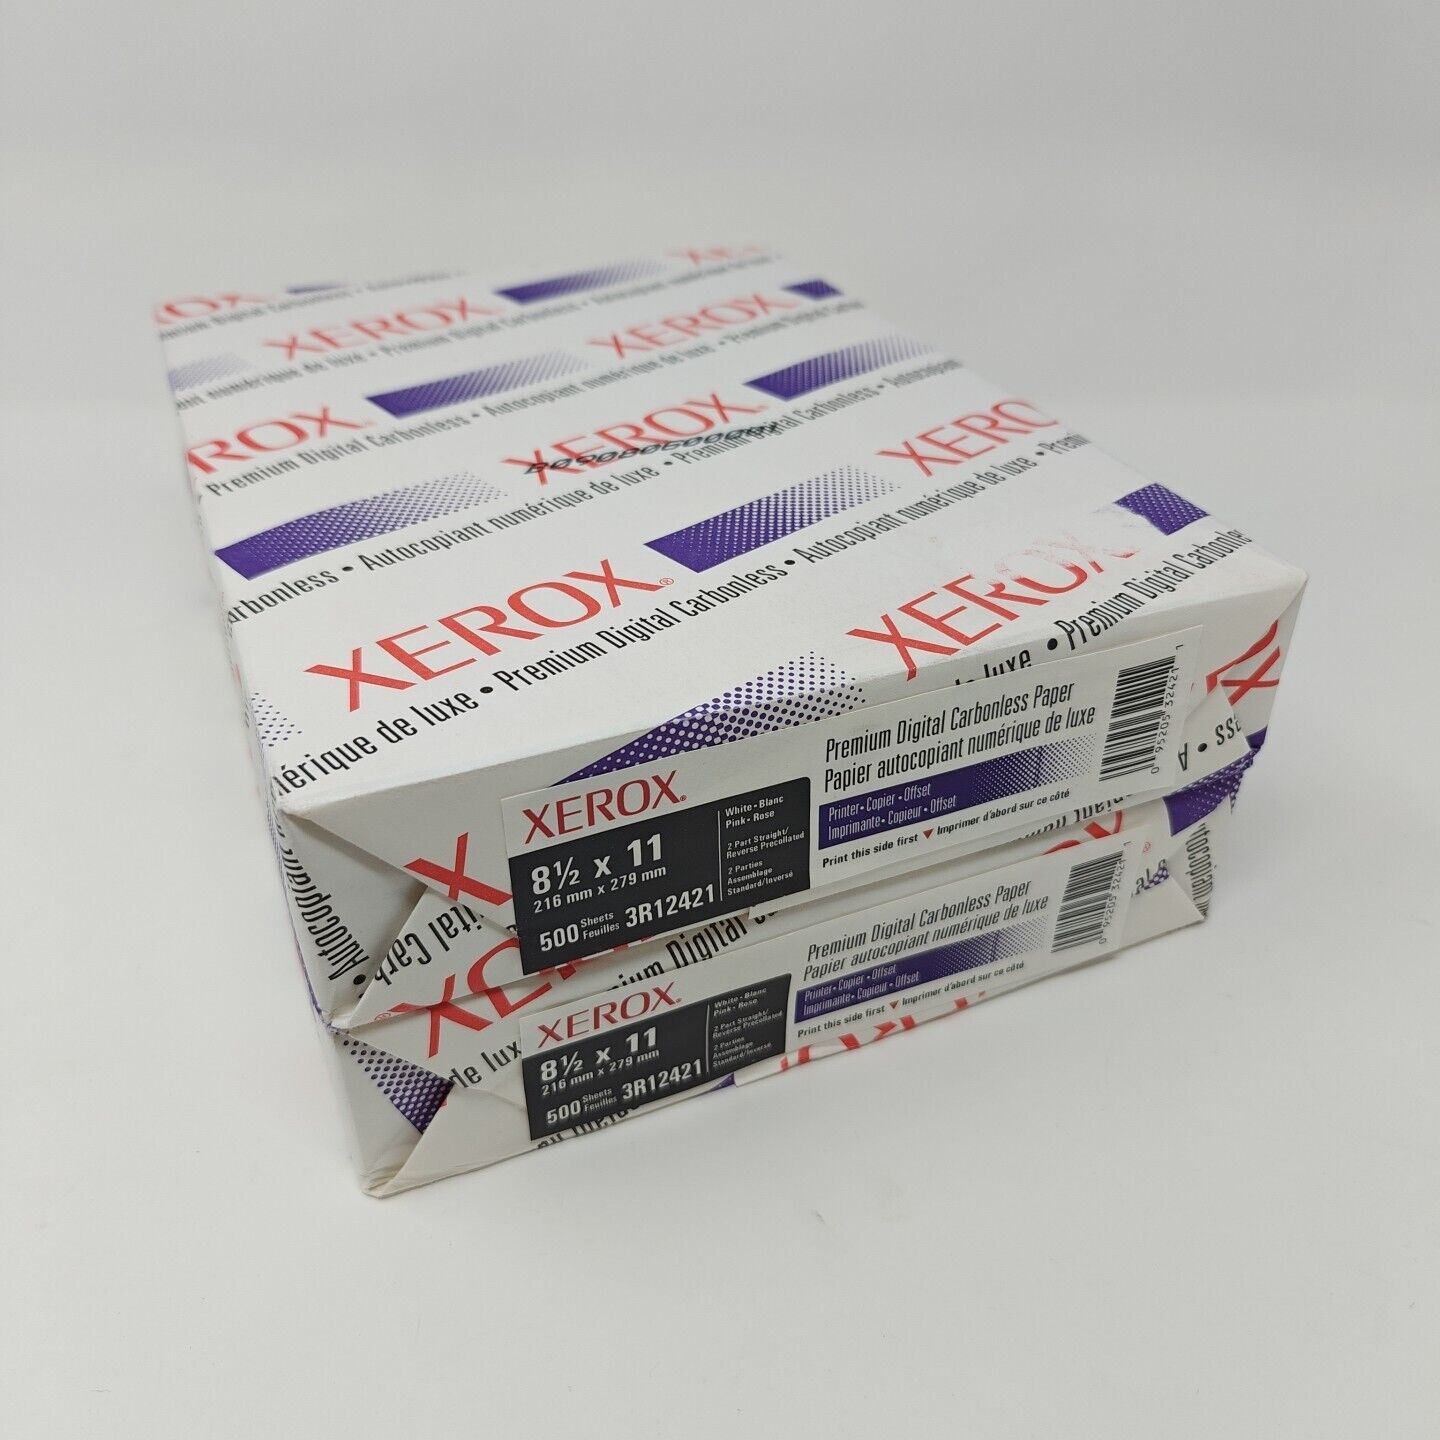 Xerox 8 1/2 X 11 Premium Digital Carbonless Paper (White / Pink) 3R12421 2 Reams